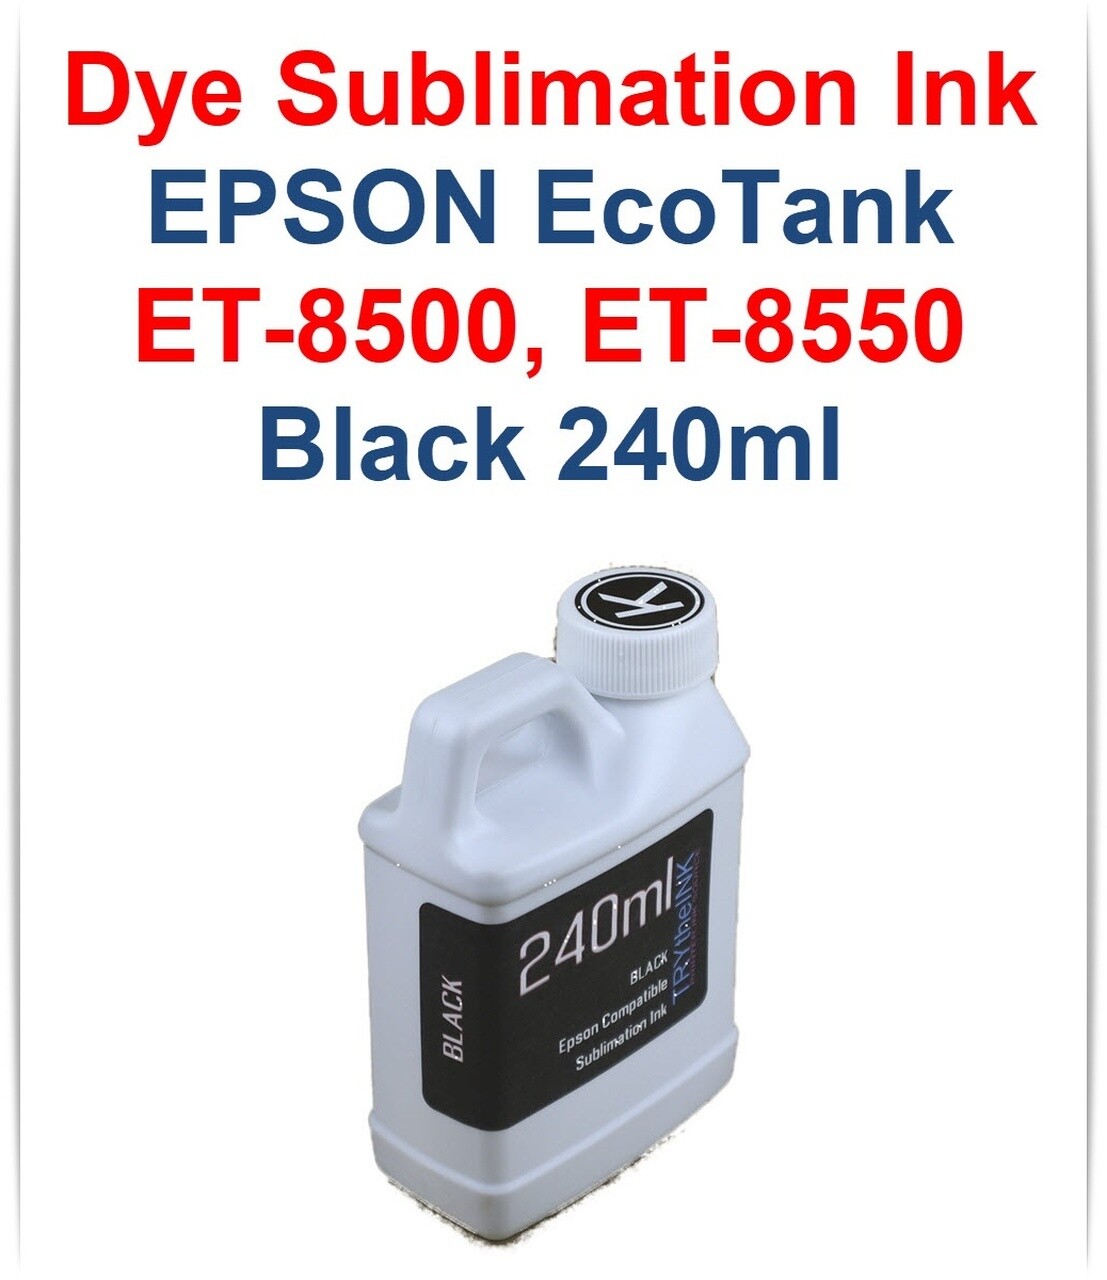 Black Dye Sublimation Ink 240ml bottle for EPSON EcoTank ET-8500 ET-8550 printers